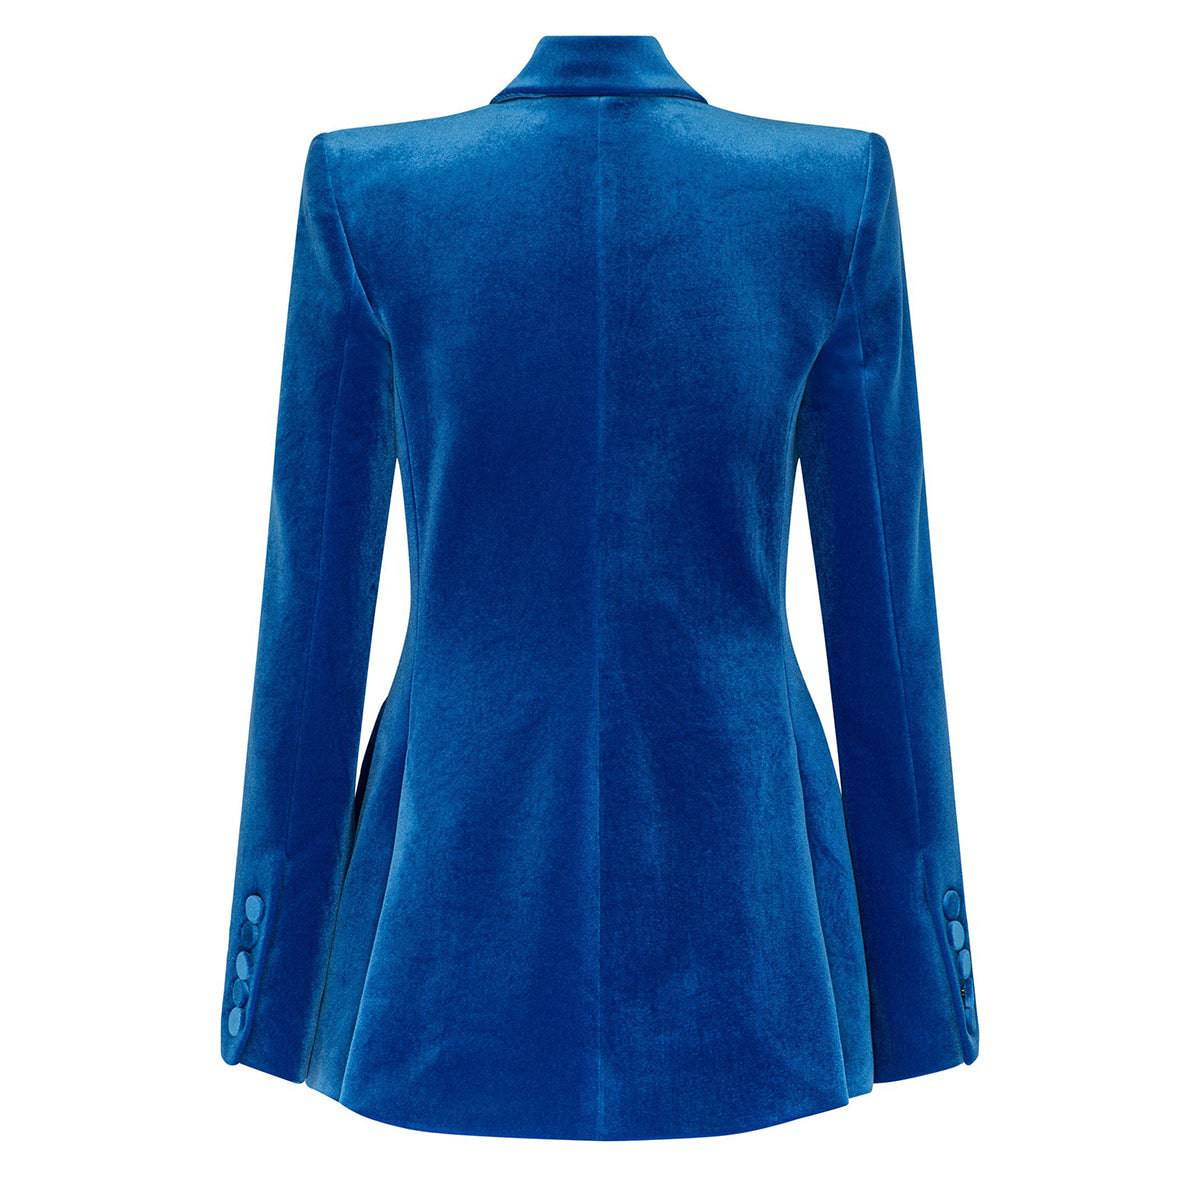 Giselle Cotton-Velvet Suit Jacket - Hot fashionista